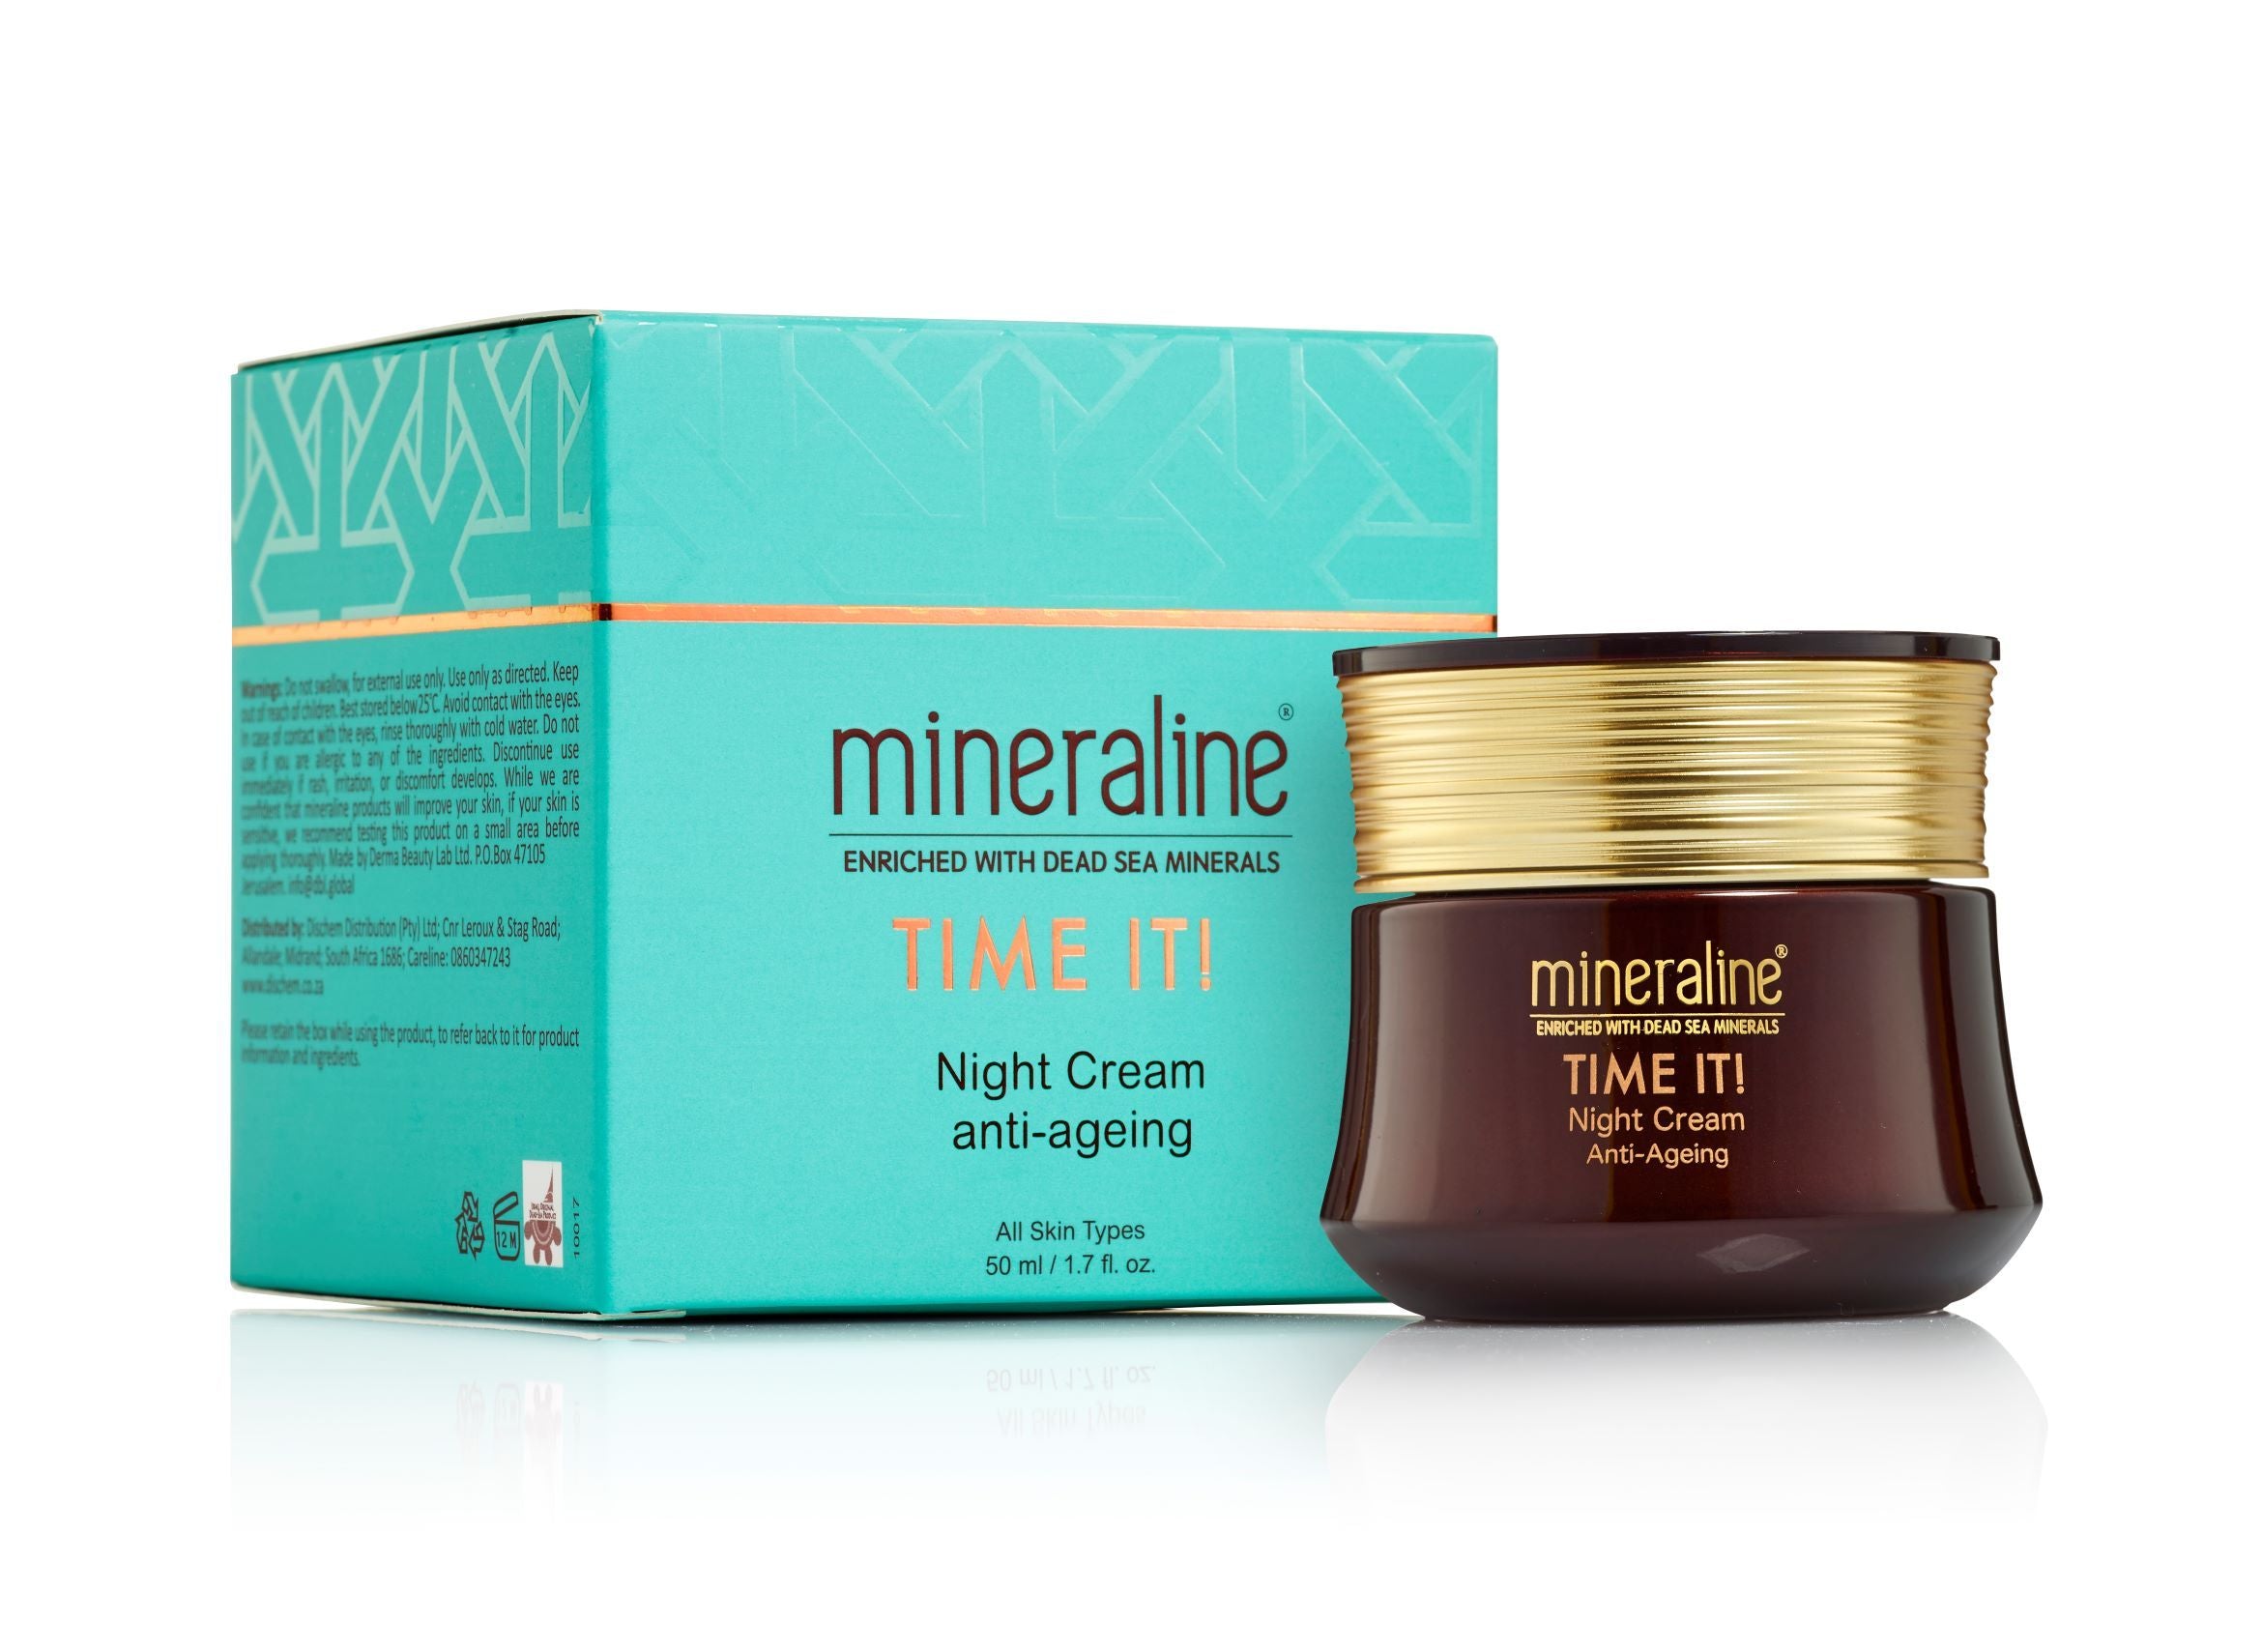 Mineraline TIME IT! Night Cream